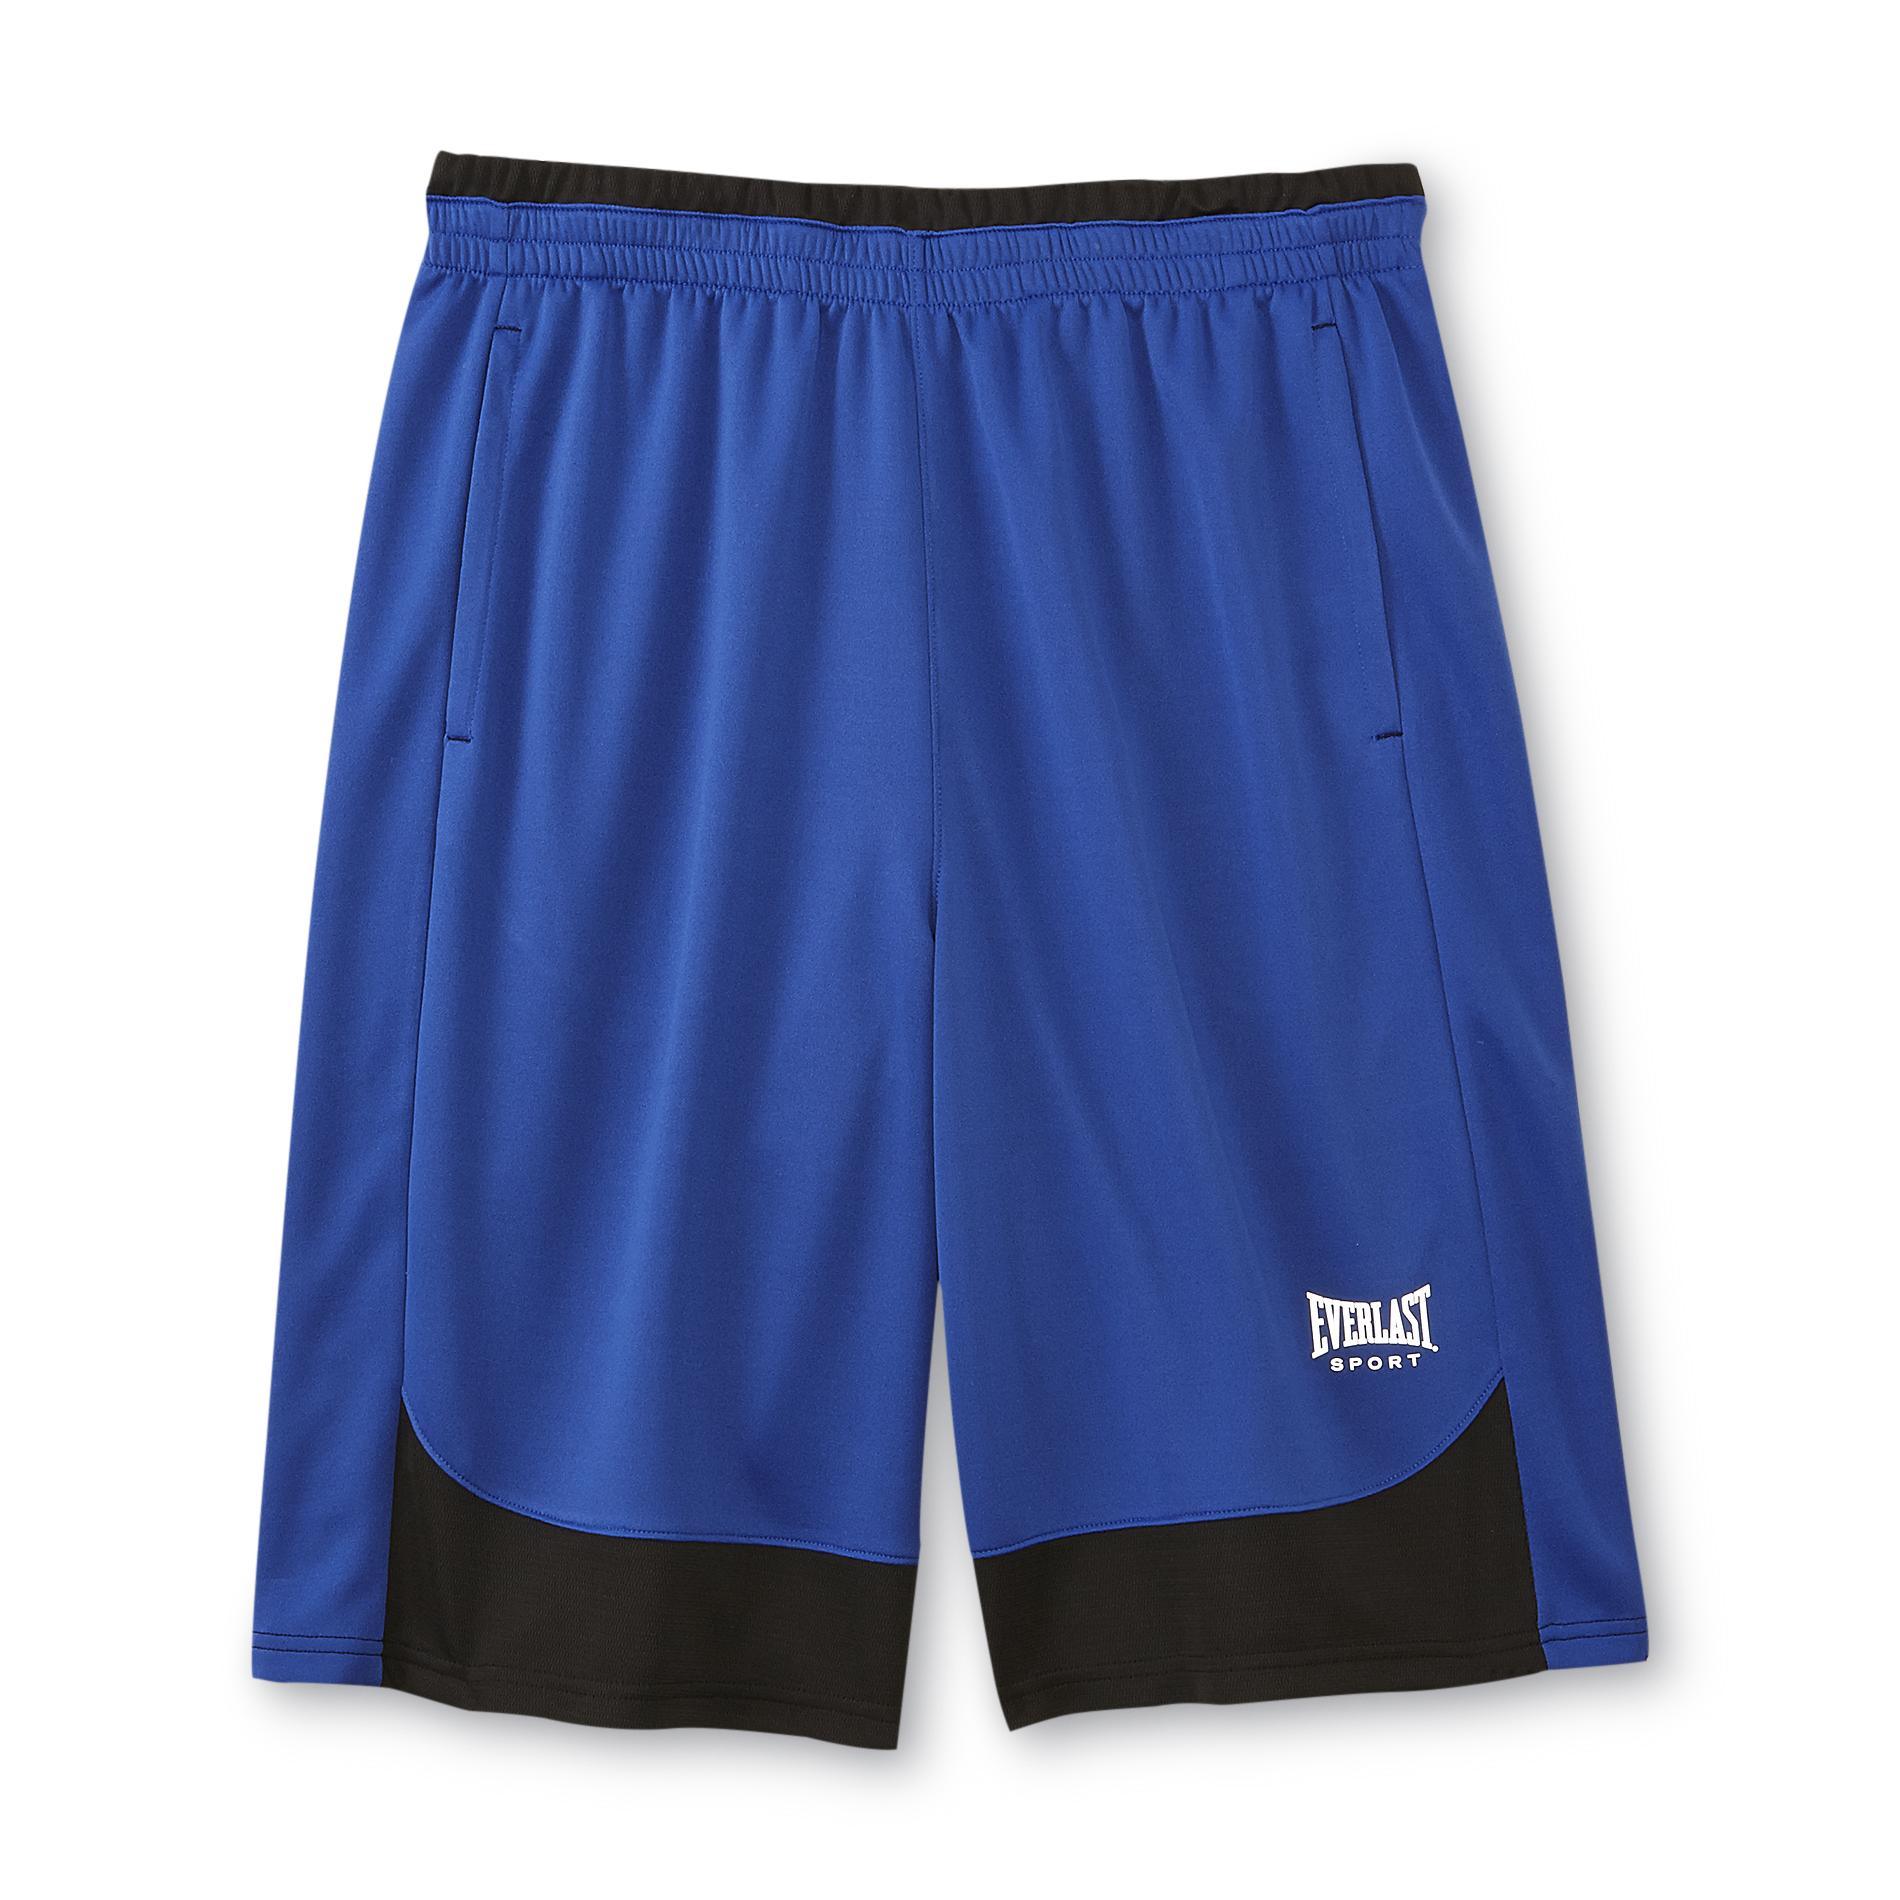 Everlast® Sport Men's Basketball Shorts - Colorblock